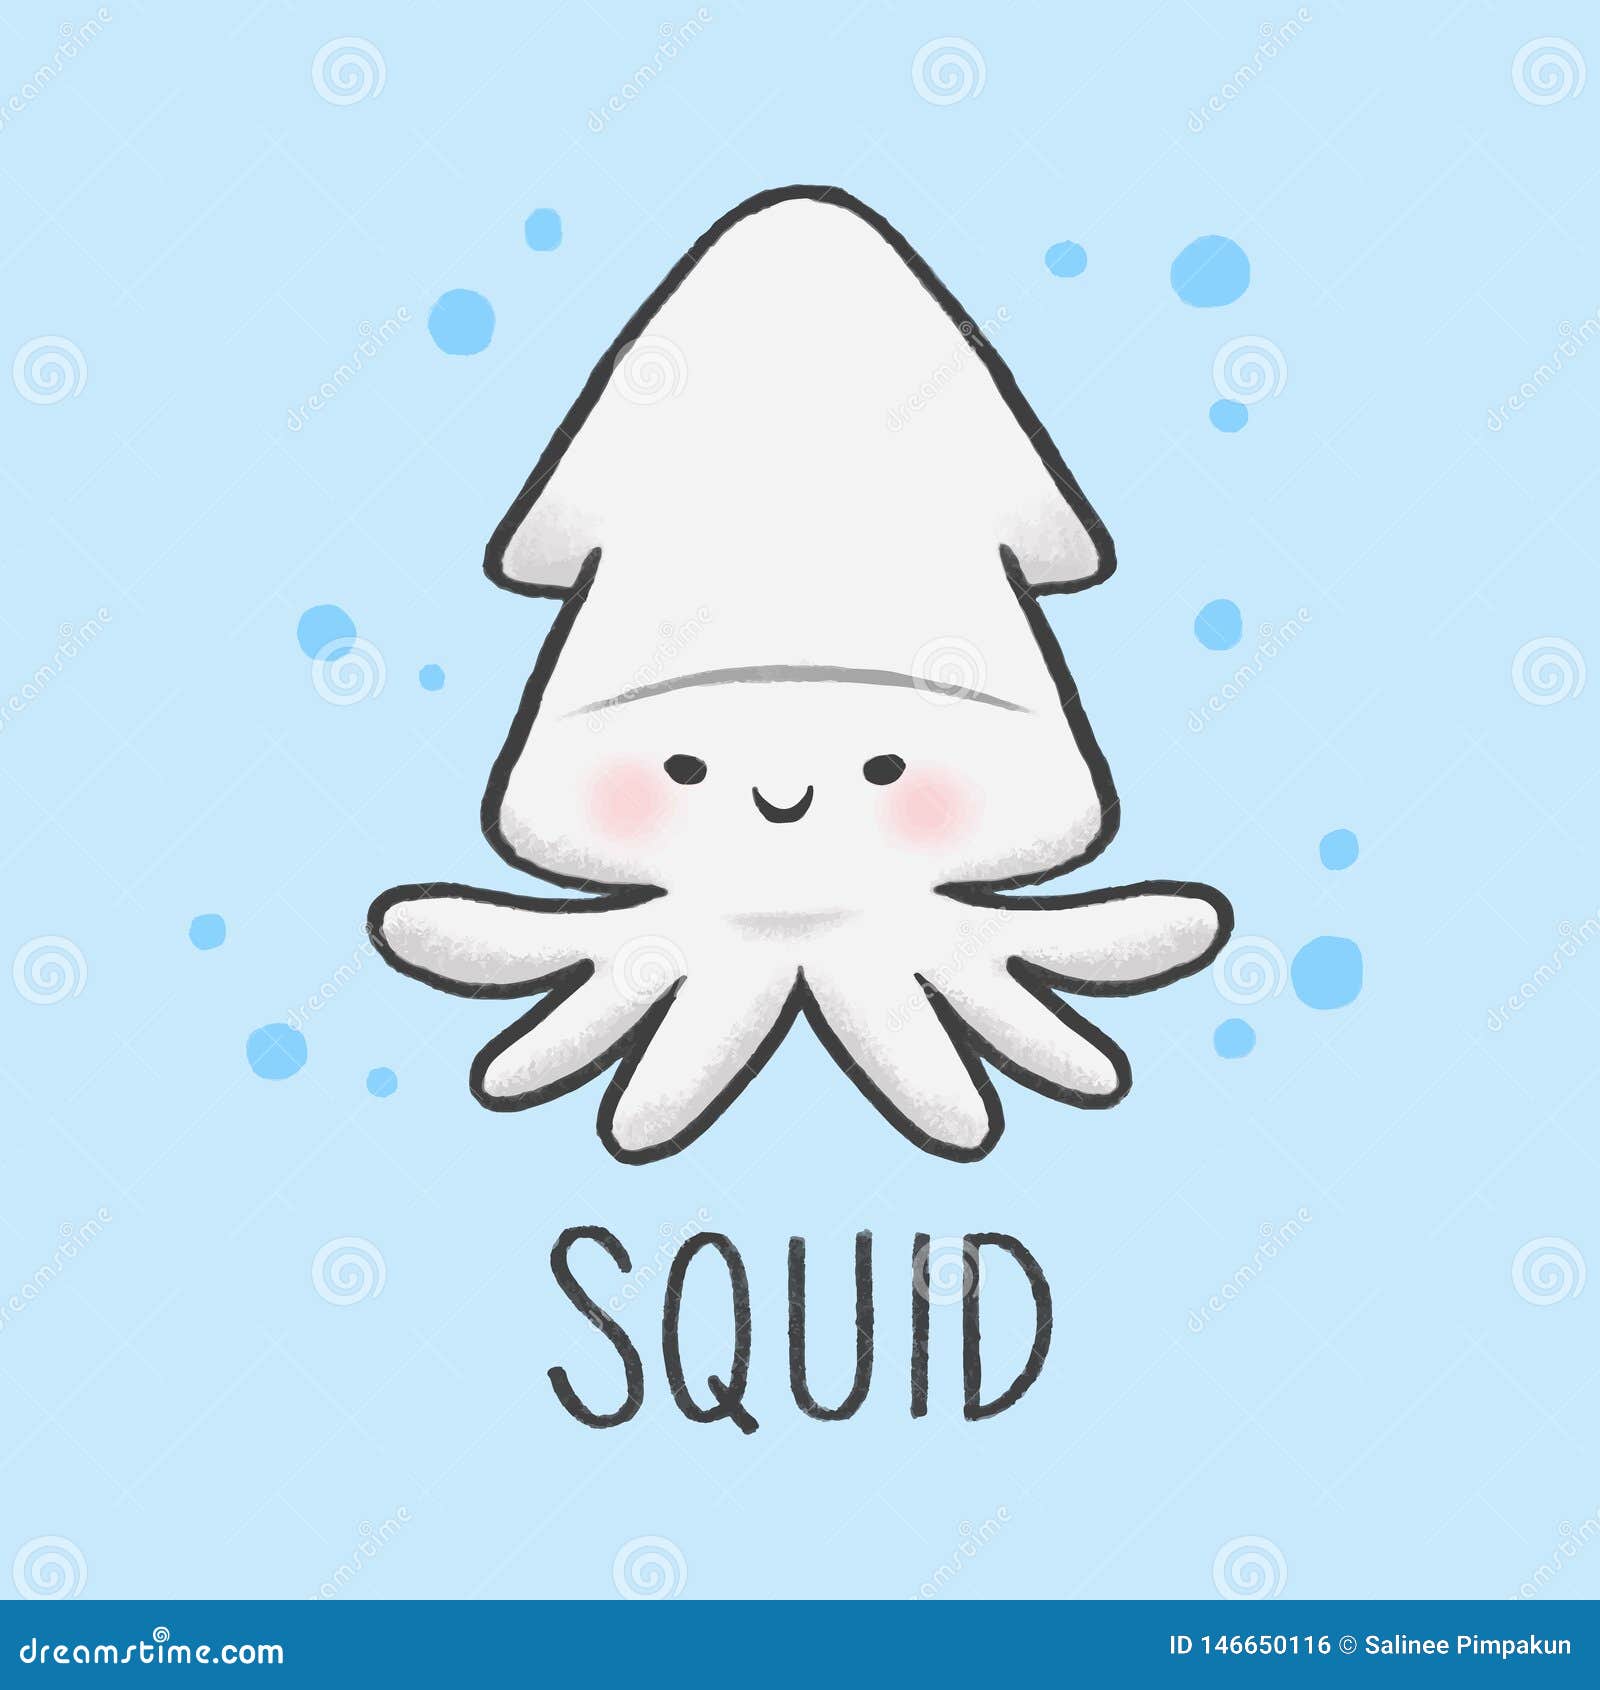 Cute Squid Cartoon Hand Drawn Style Stock Vector - Illustration of cartoon,  design: 146650116